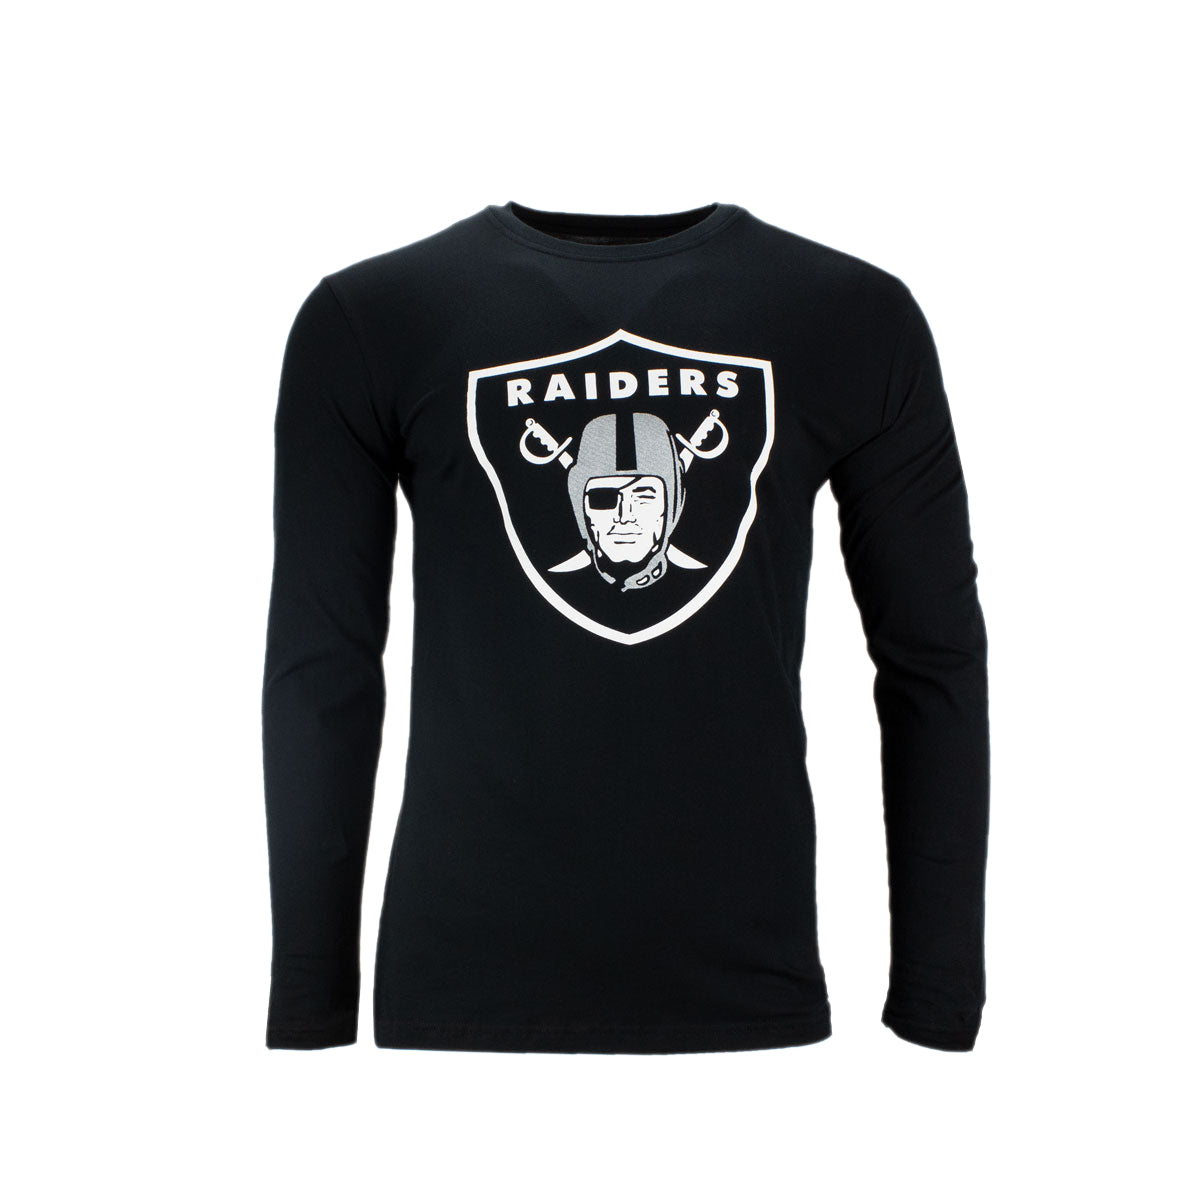 Fanatics NFL Las Vegas Oakland Raiders langarm Shirt Herren 1568MBLK1ADORA XS